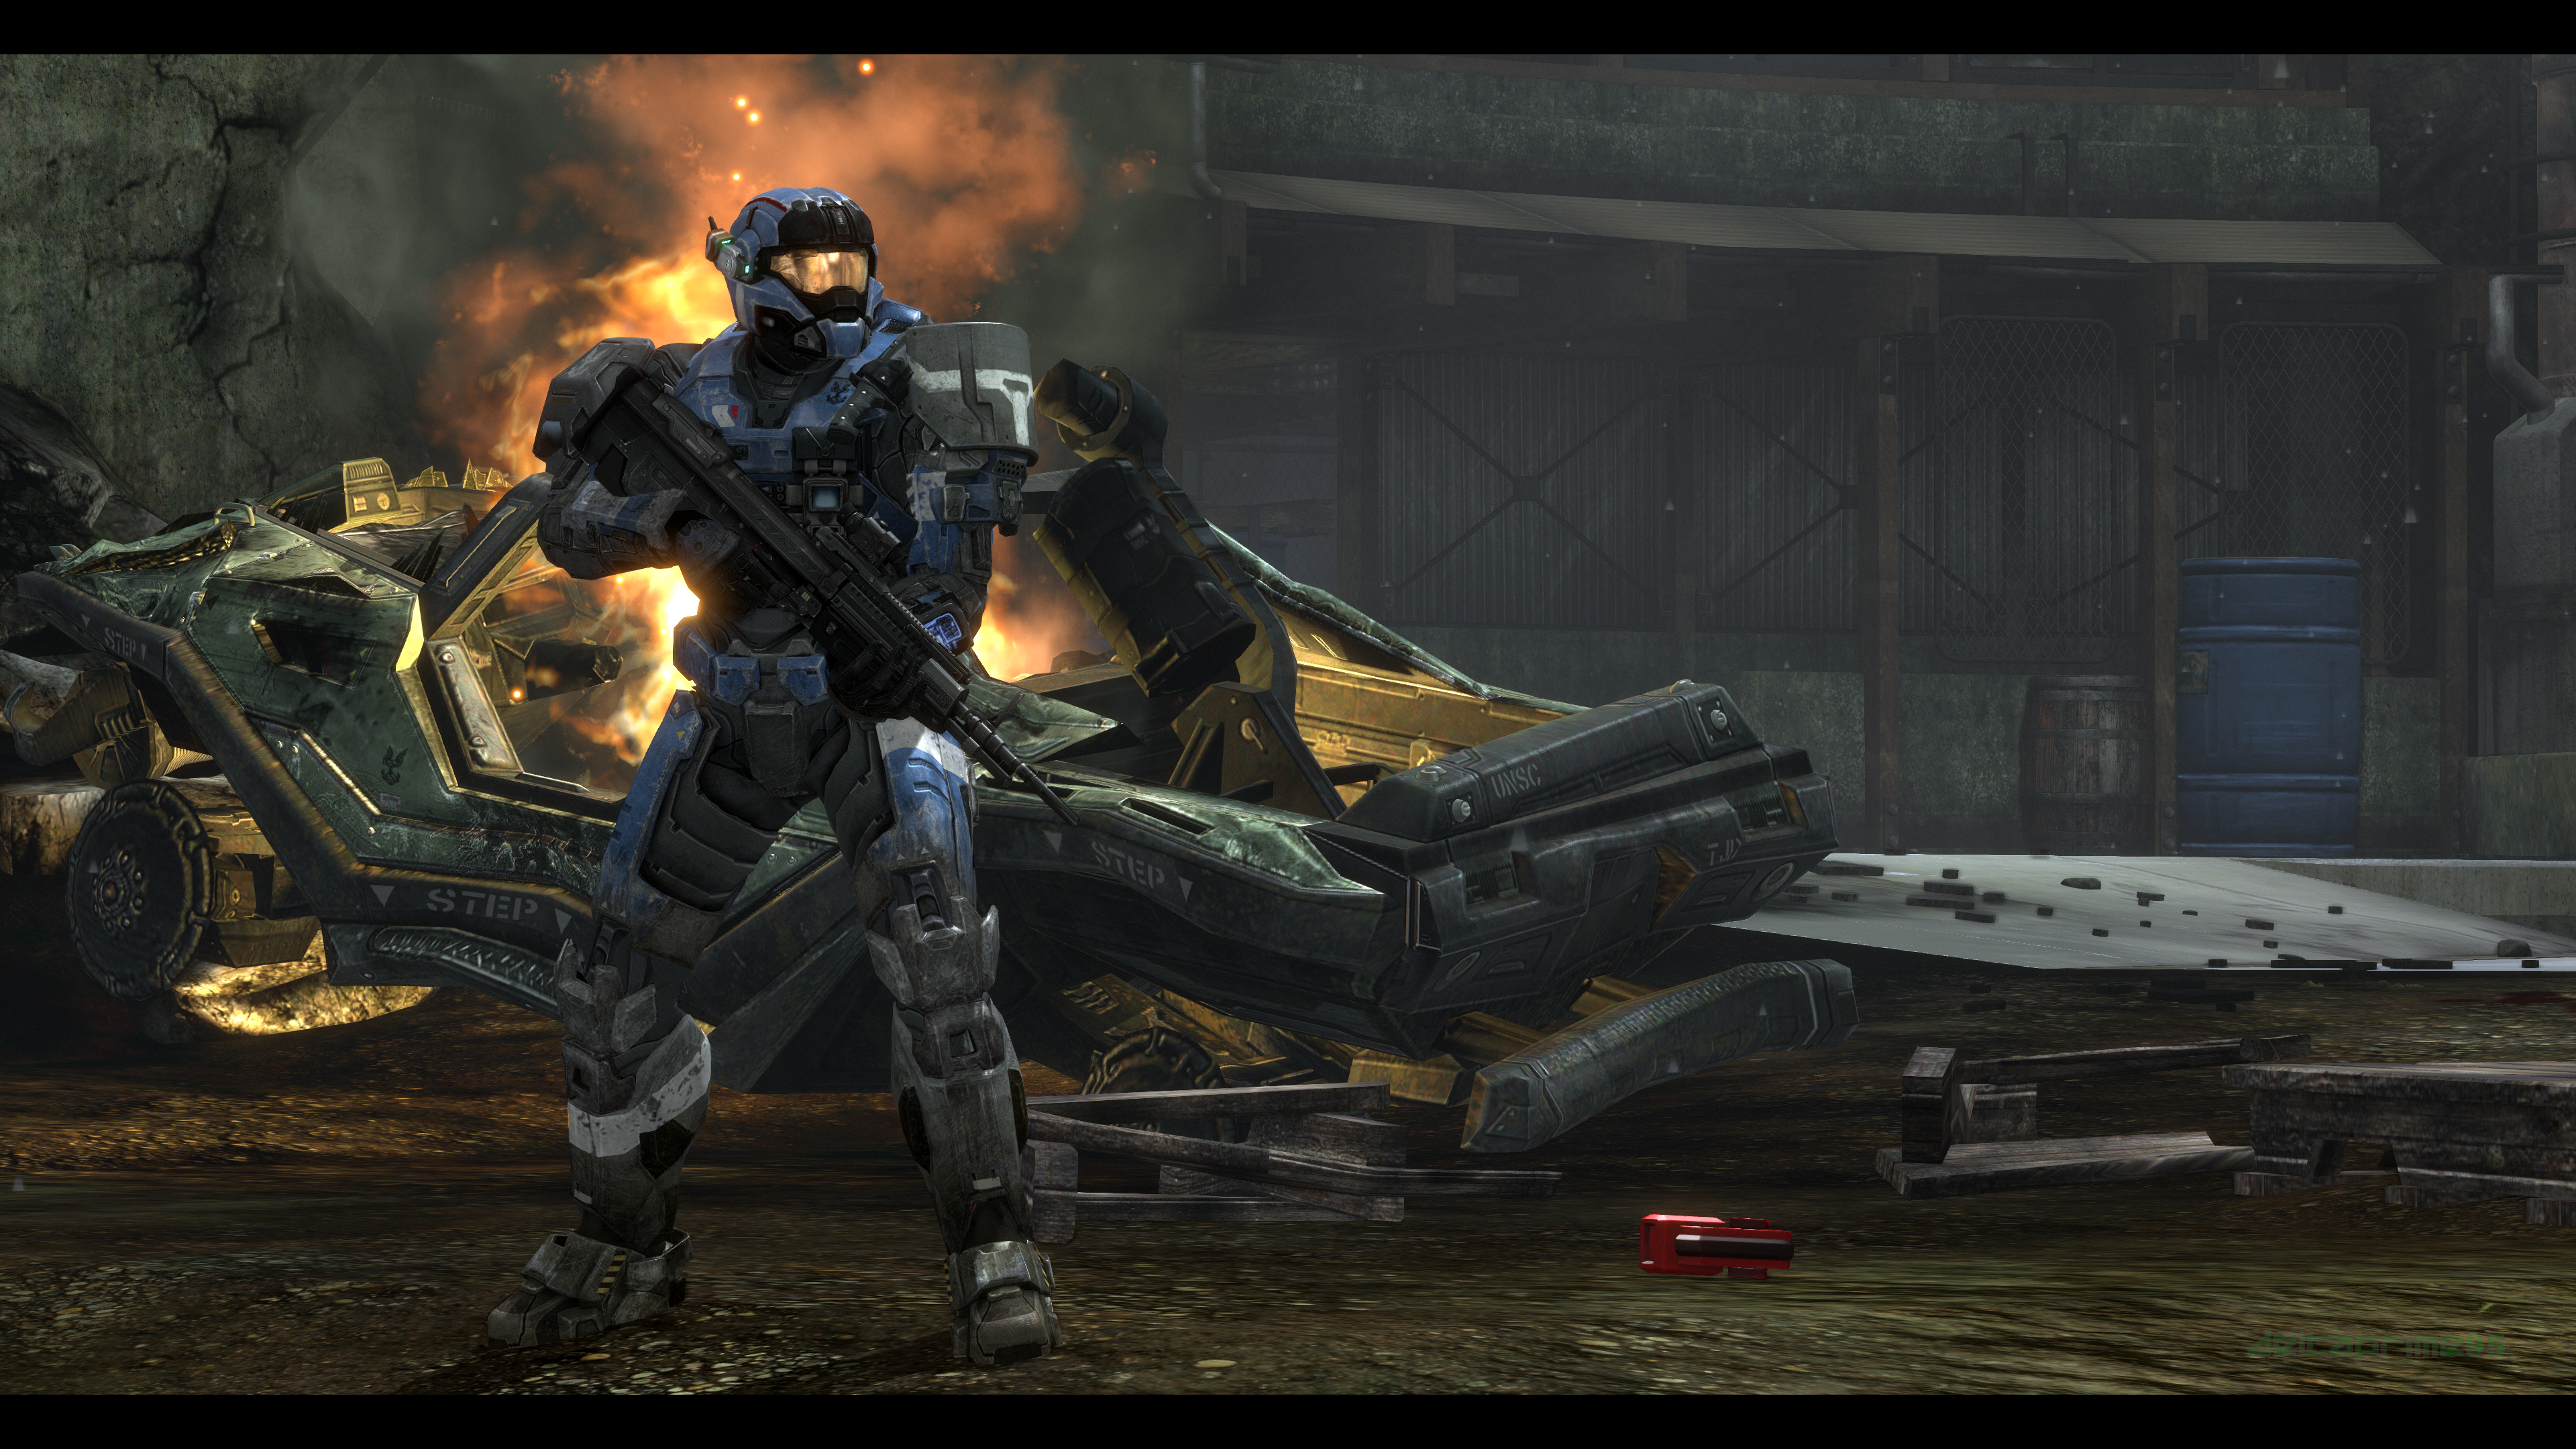 General 3840x2160 PC gaming screen shot Halo Reach Planet Reach Carter-A259 M12 Warthog fire Spartans (Halo)